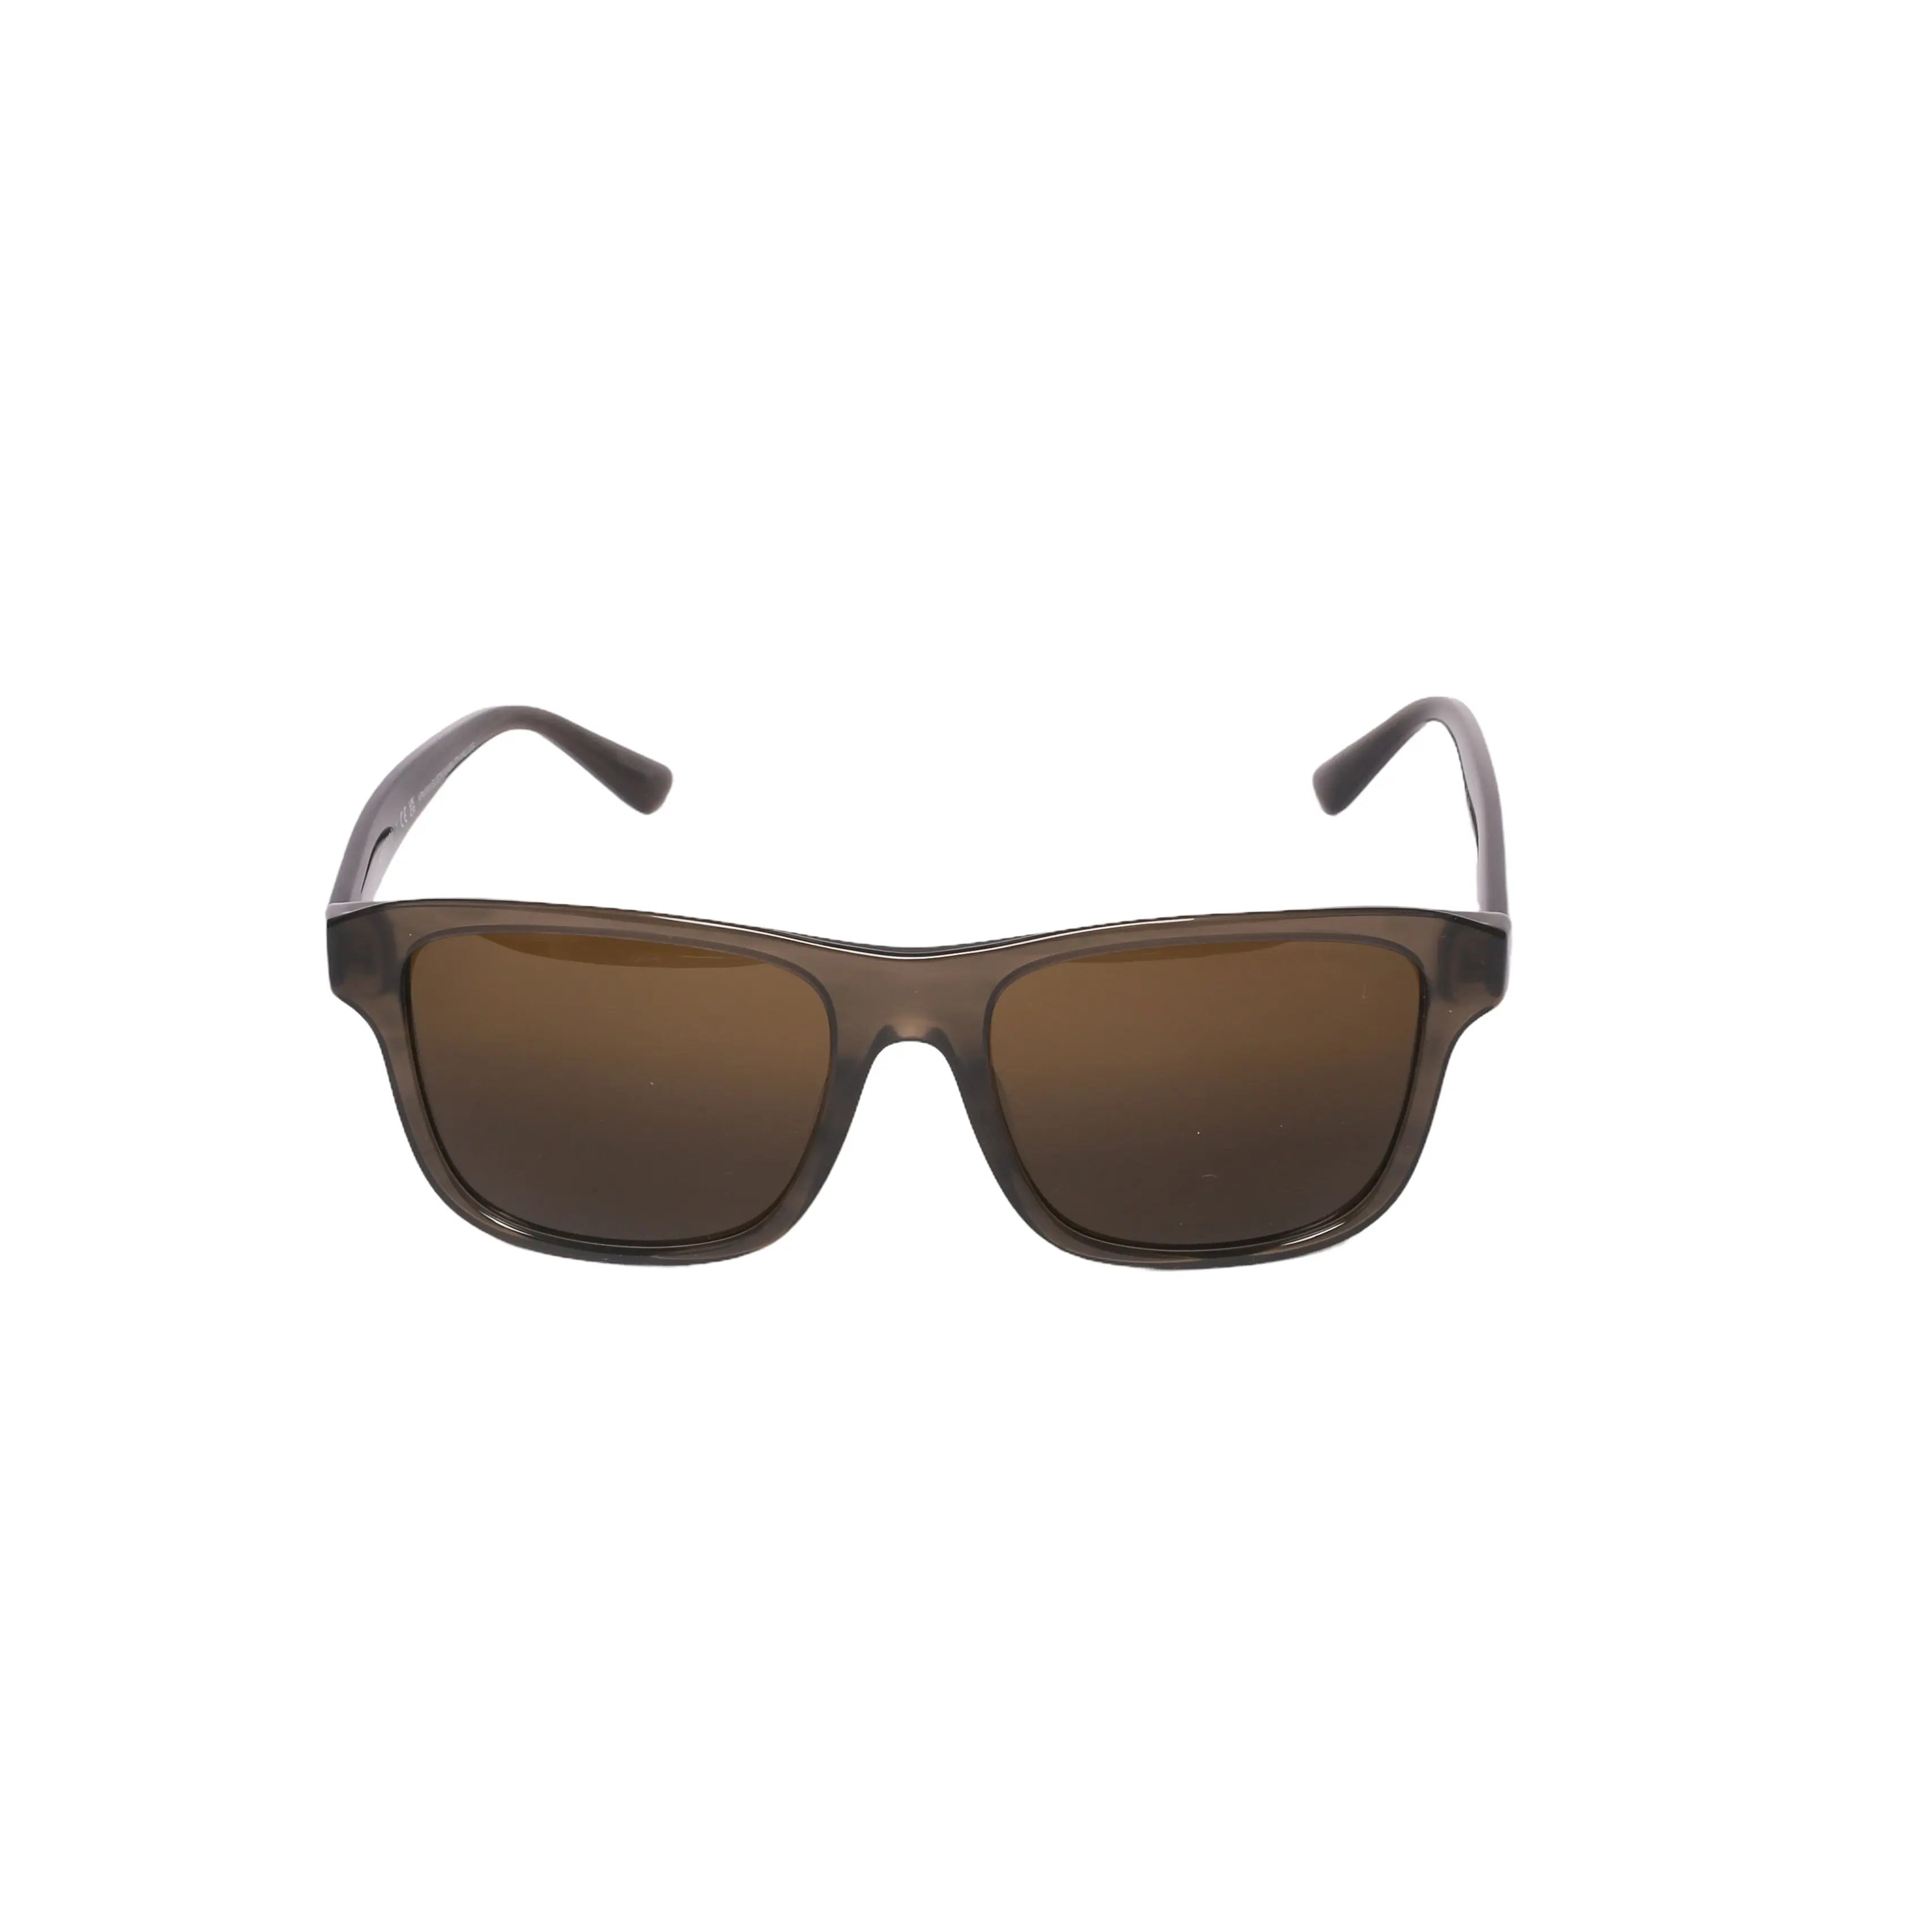 Emporio Armani-EA 4208-56-6055 Sunglasses - Premium Sunglasses from Emporio Armani - Just Rs. 12790! Shop now at Laxmi Opticians